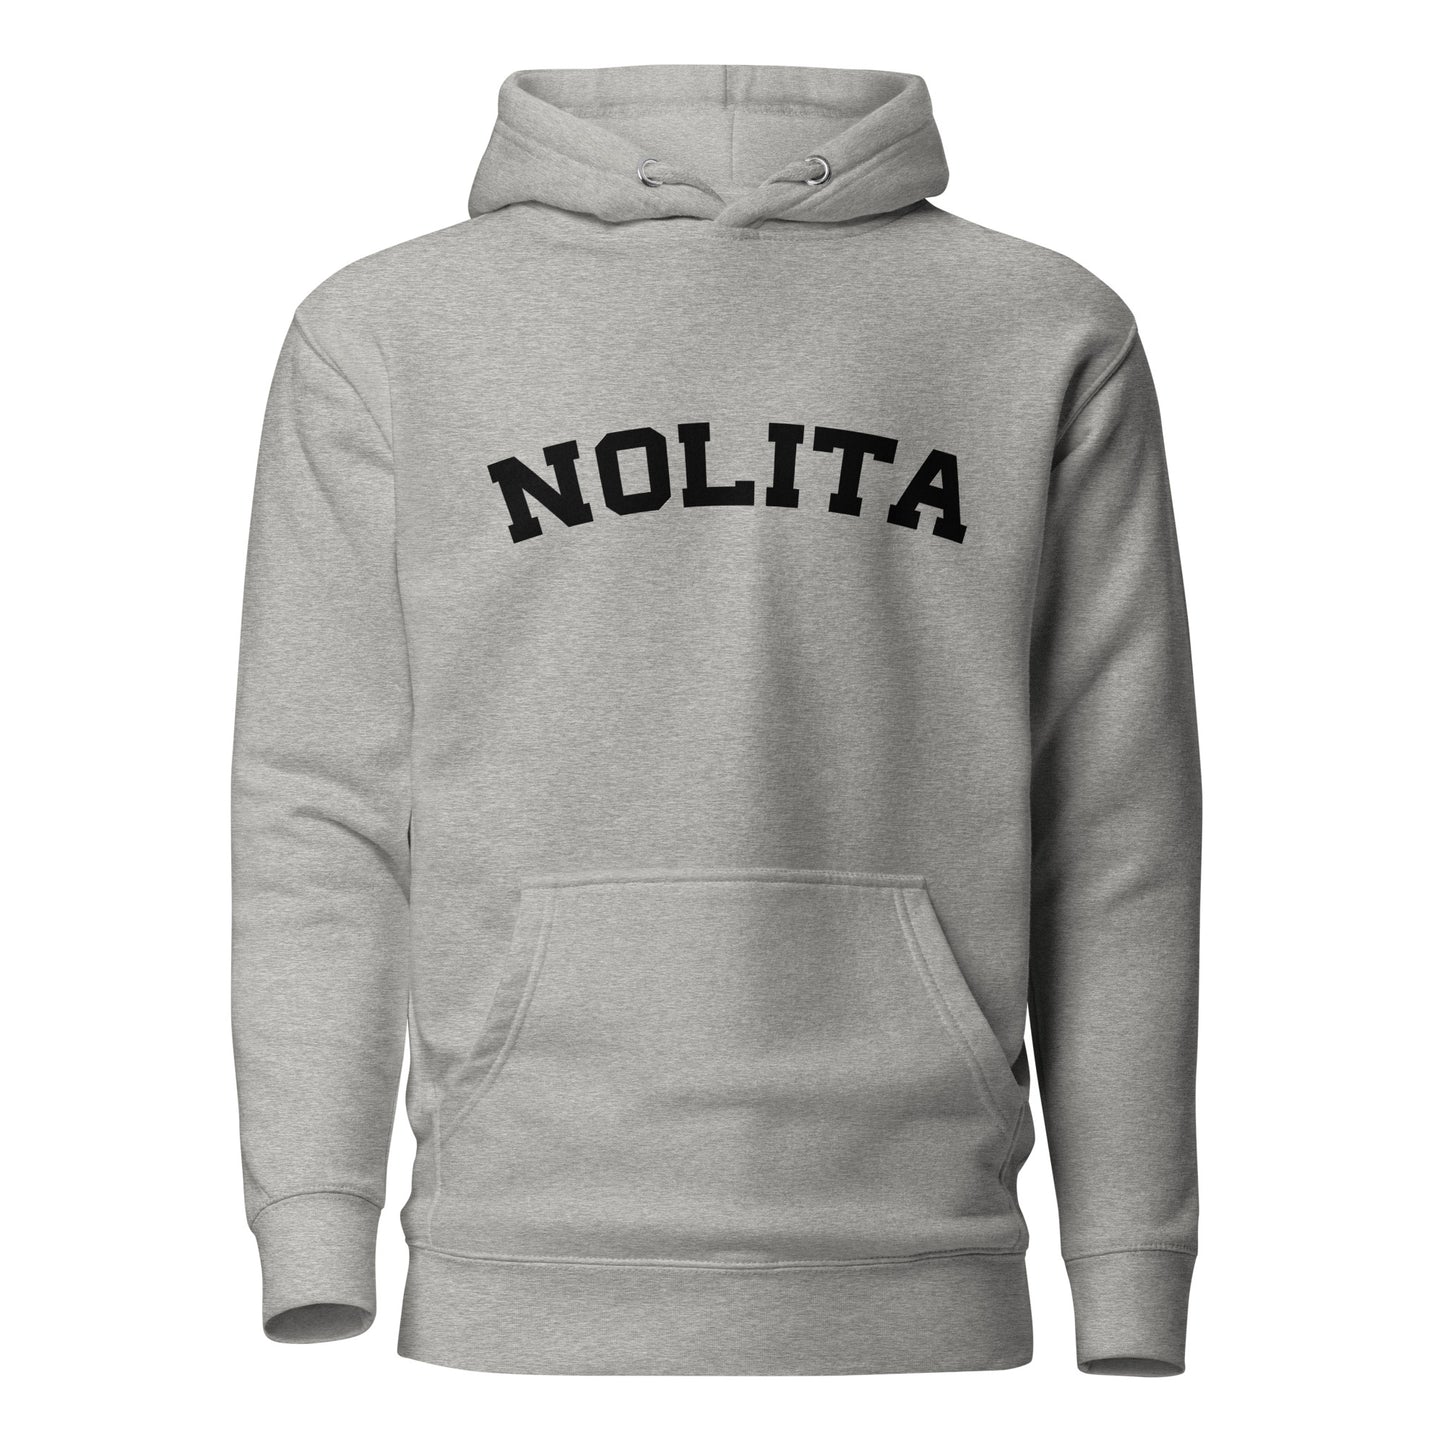 Nolita Unisex Hoodie Sweatshirt